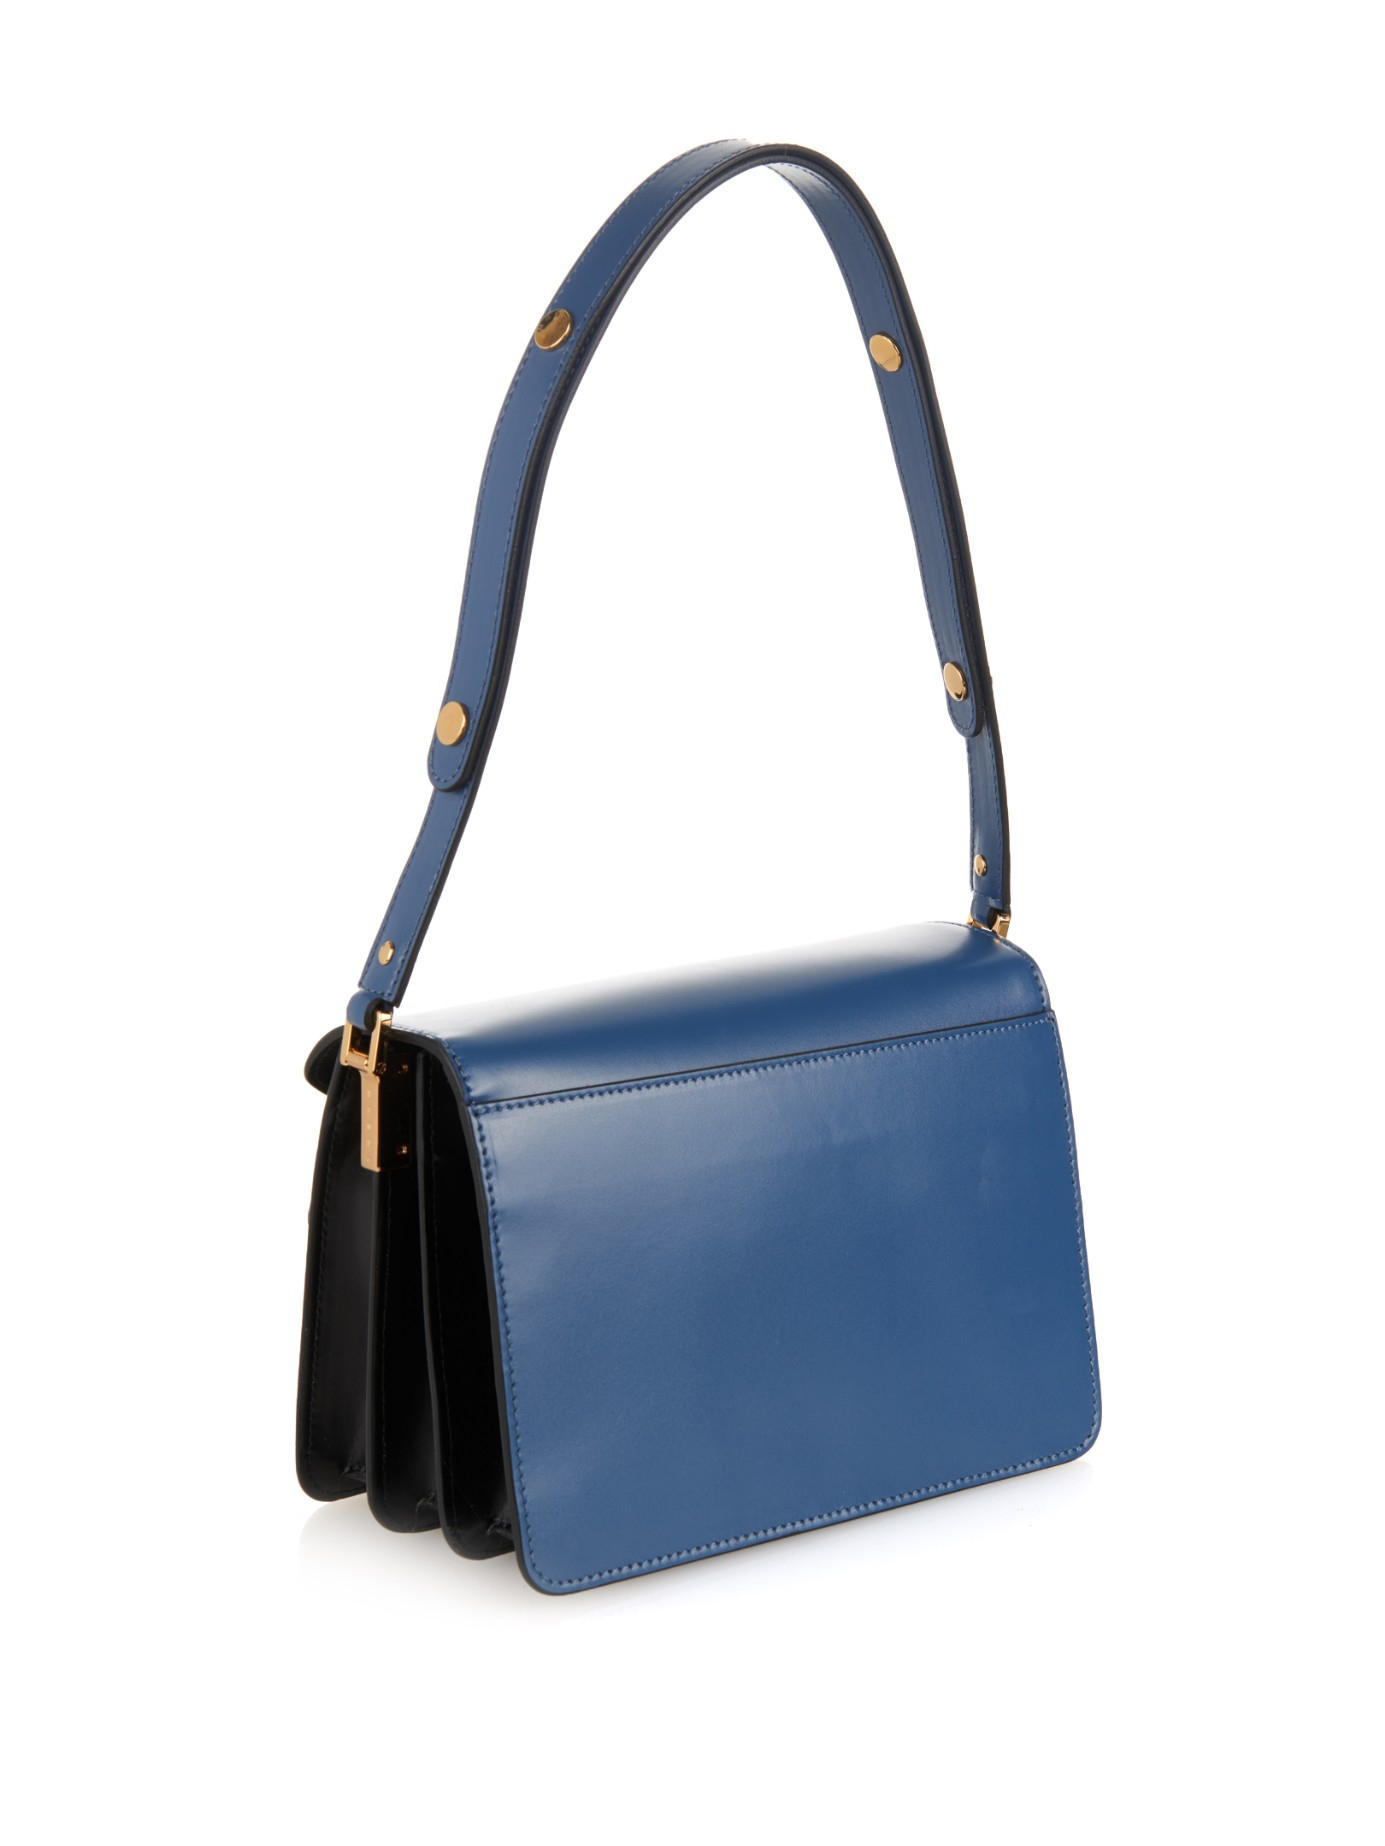 Lyst - Marni Trunk Medium Bi-Colour Leather Shoulder Bag in Blue